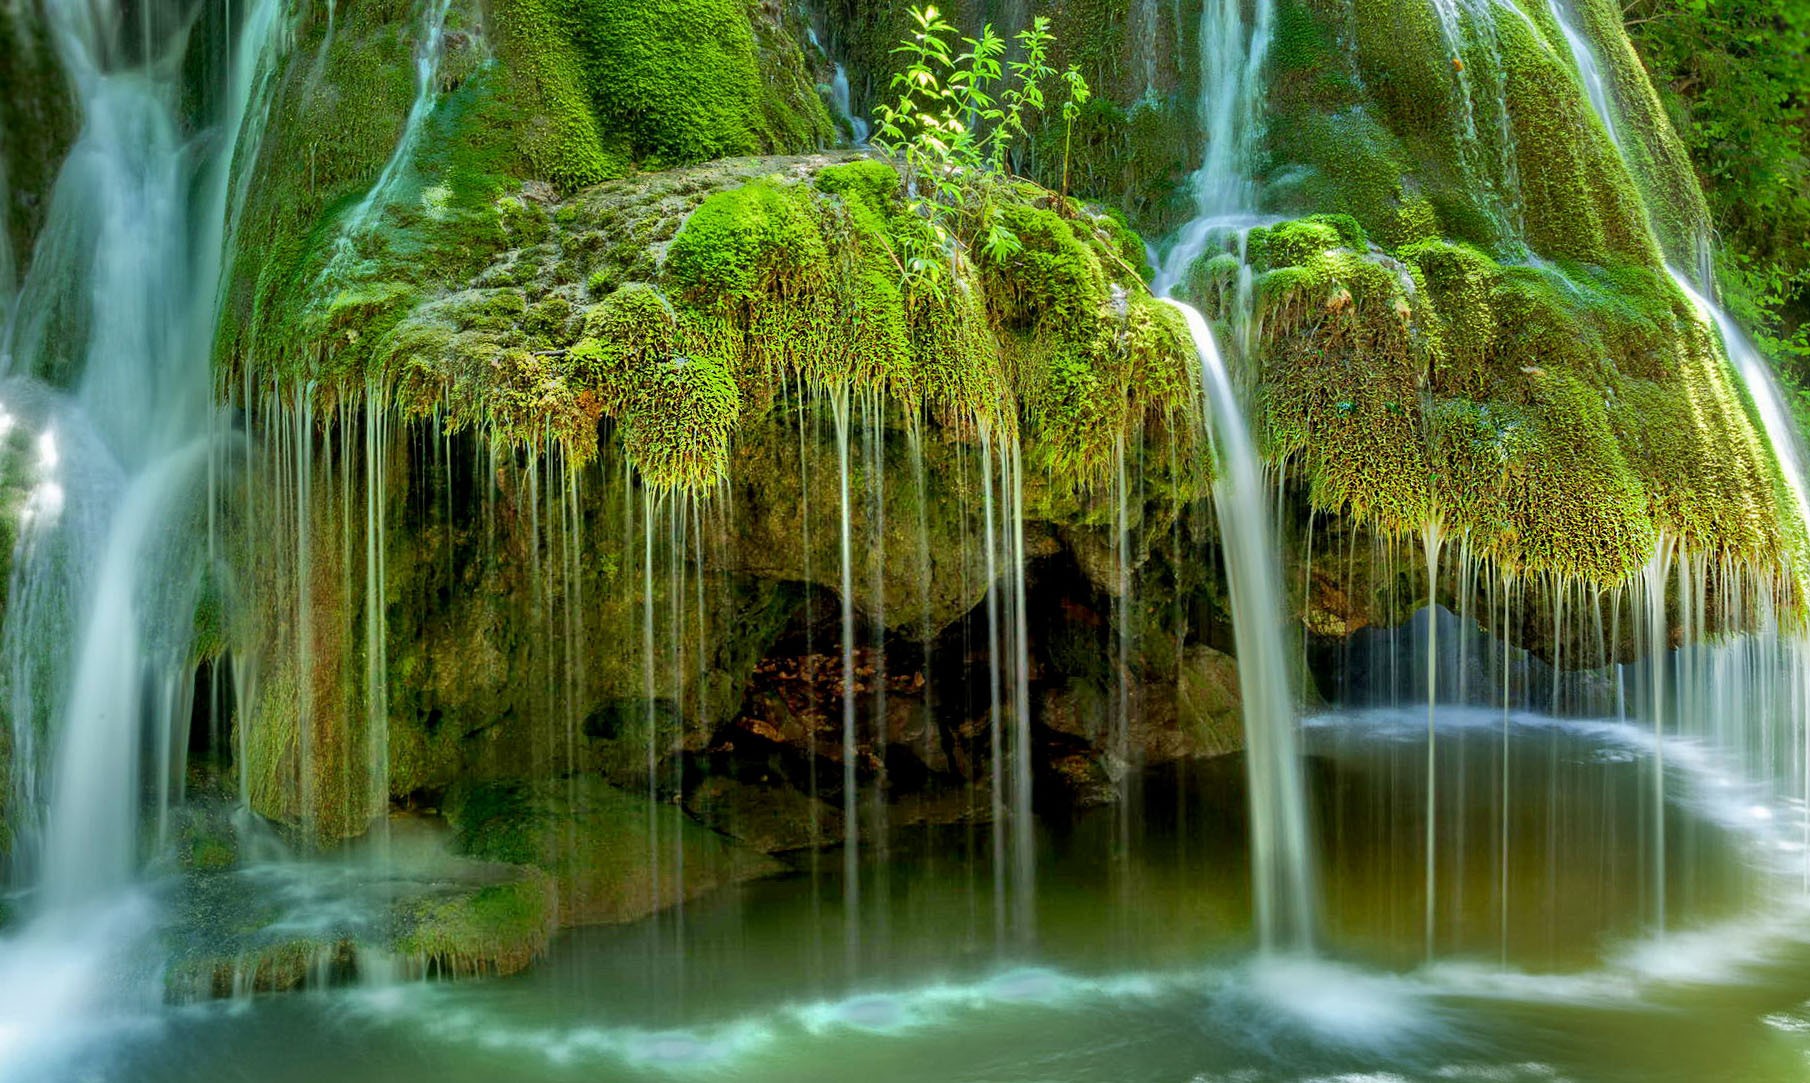 Flowing Water In Nature HD Wallpaper